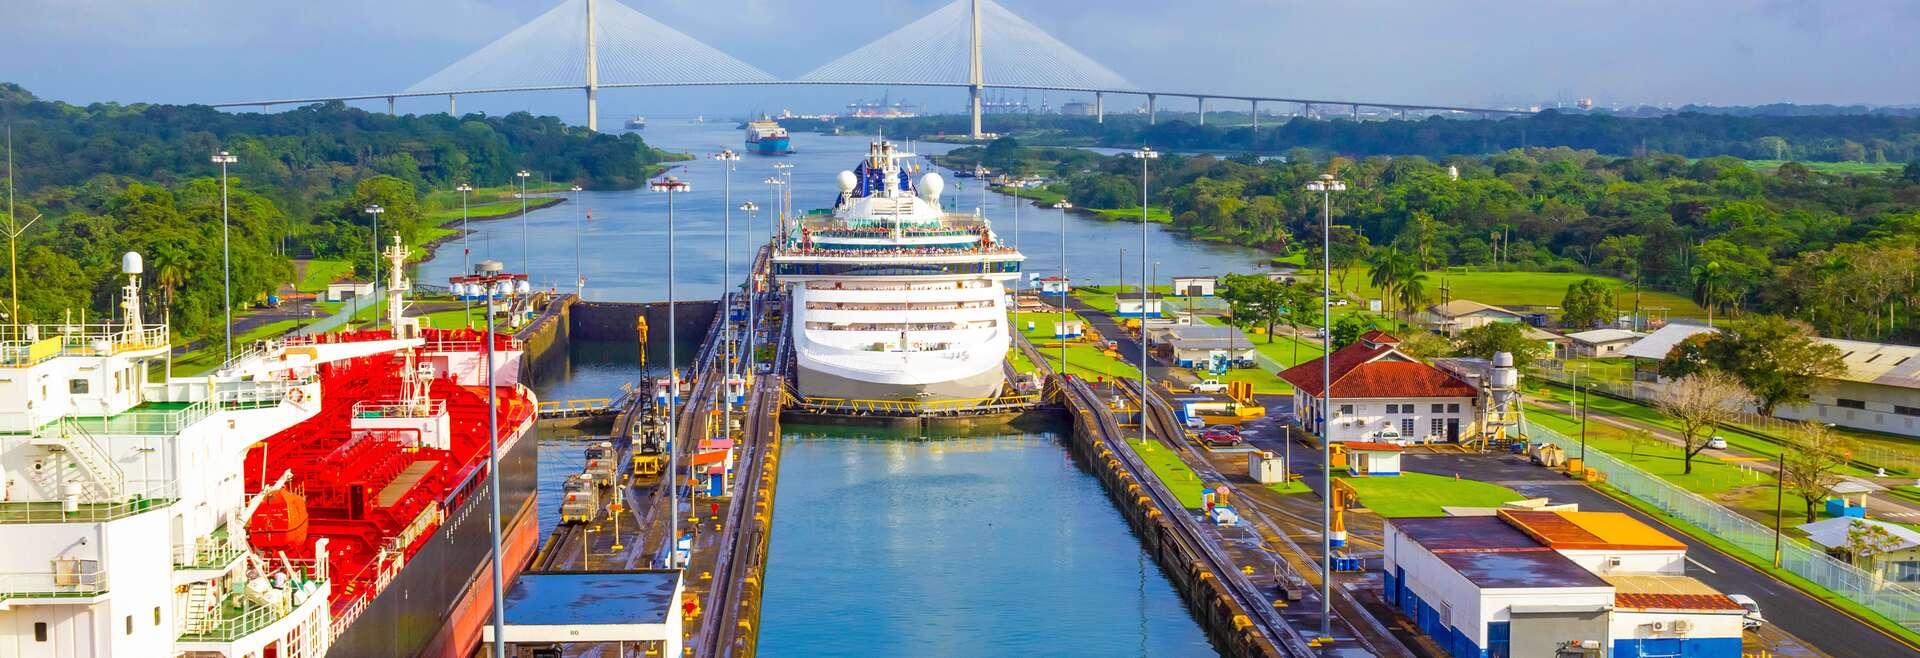 Séjour linguistique Panama, Panama City - Panama canal crossing